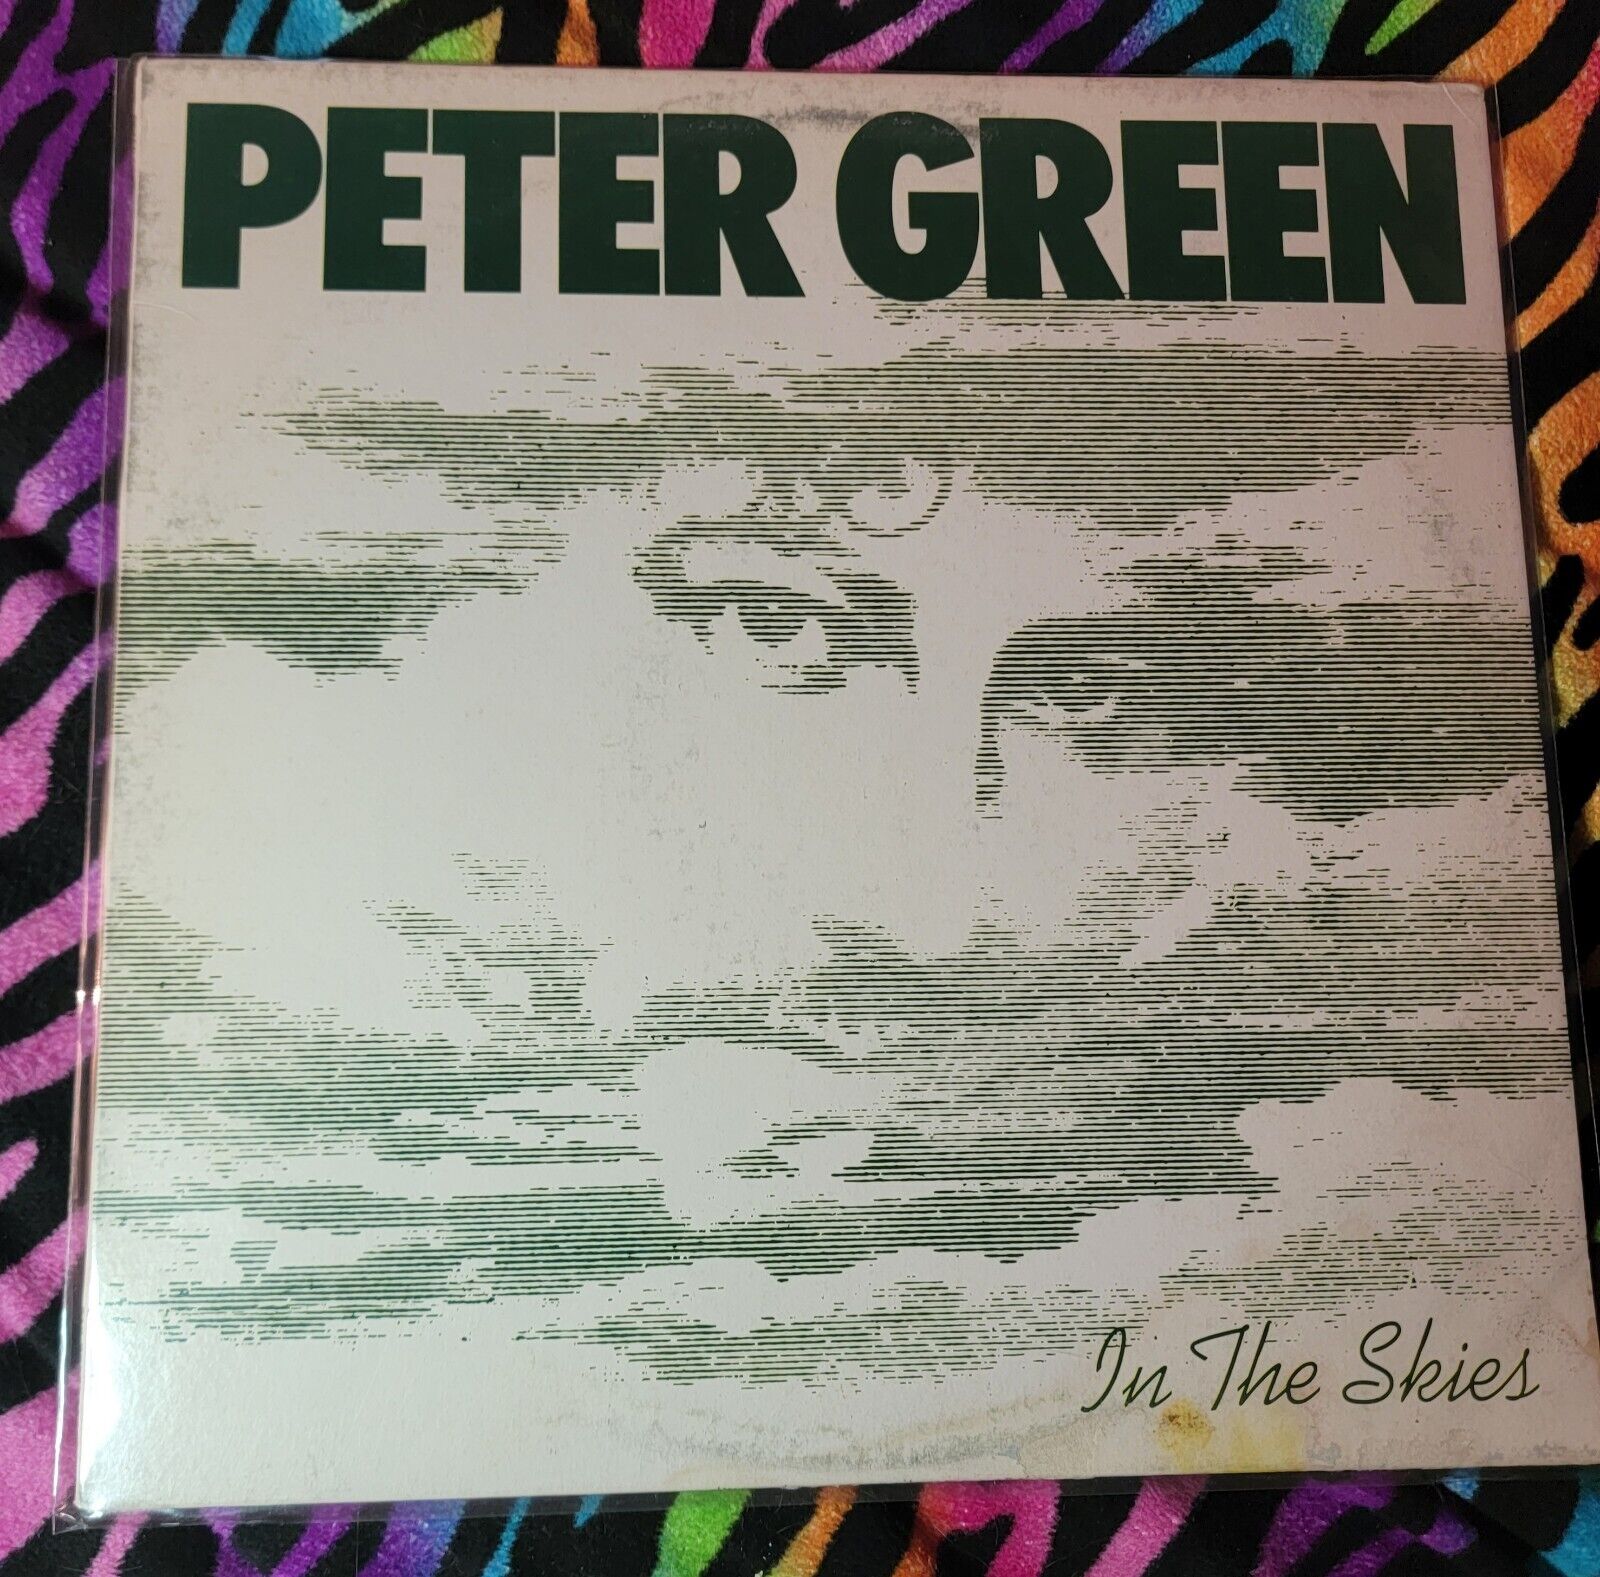 PETER GREEN IN THE SKIES FLEETWOOD MAC 1979 LP VINYL ALBUM